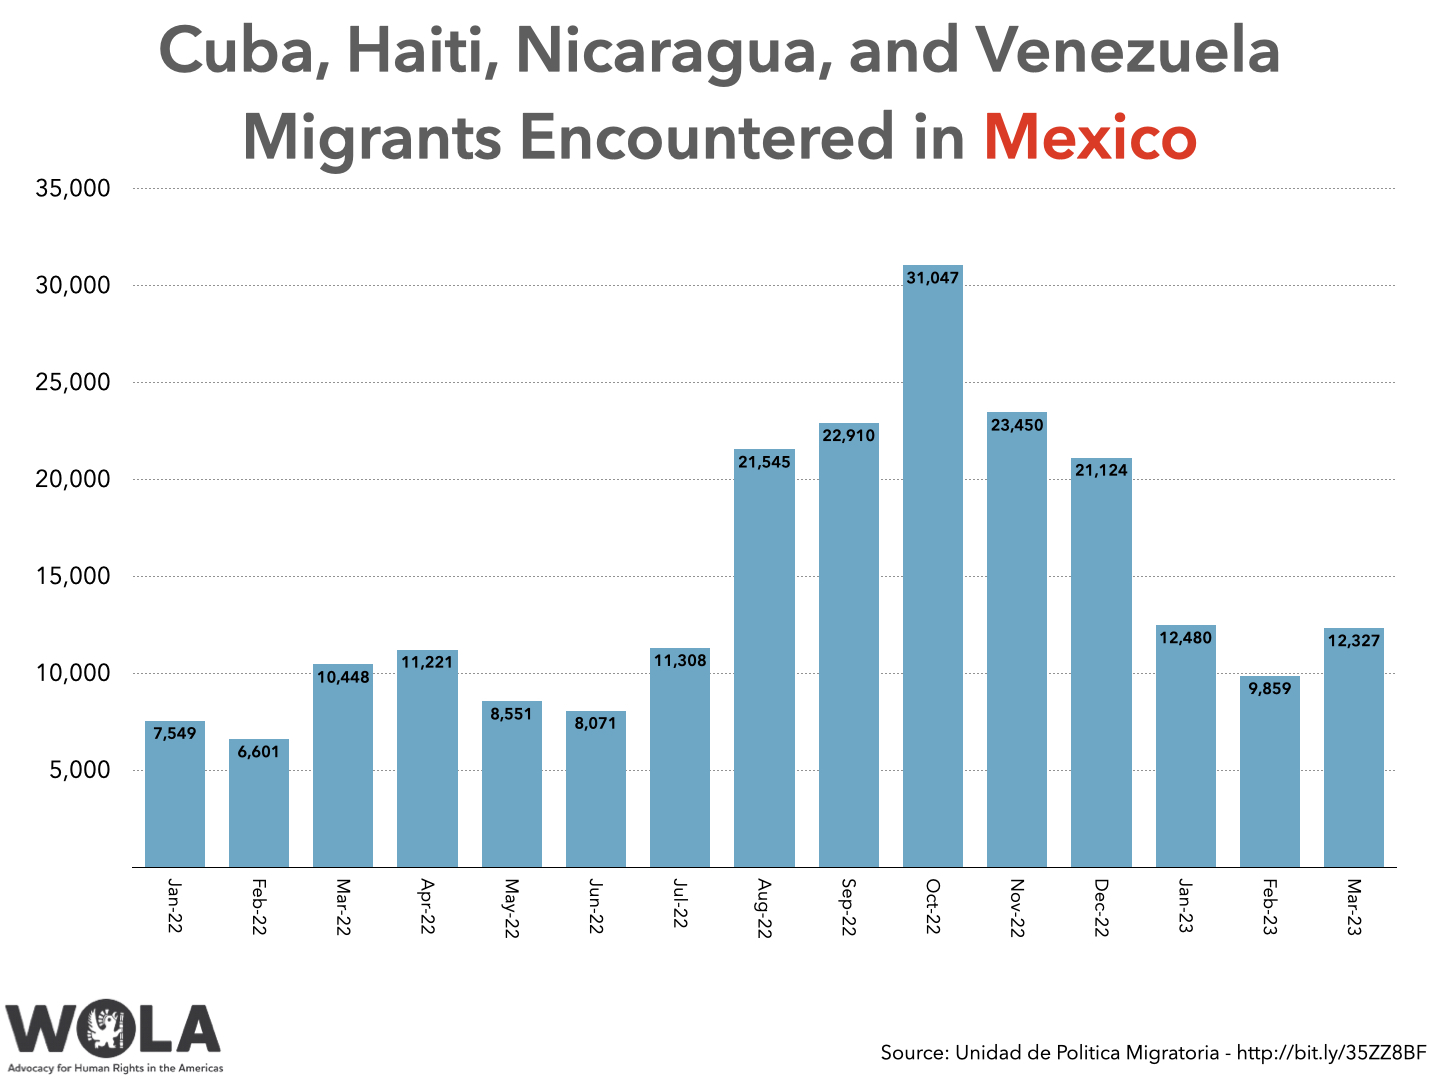 Chart: Cuba, Haiti, Nicaragua, and Venezuela Migrants Encountered in Mexico

	Jan-22	Feb-22	Mar-22	Apr-22	May-22	Jun-22	Jul-22	Aug-22	Sep-22	Oct-22	Nov-22	Dec-22	Jan-23	Feb-23	Mar-23
Total	7549	6601	10448	11221	8551	8071	11308	21545	22910	31047	23450	21124	12480	9859	12327